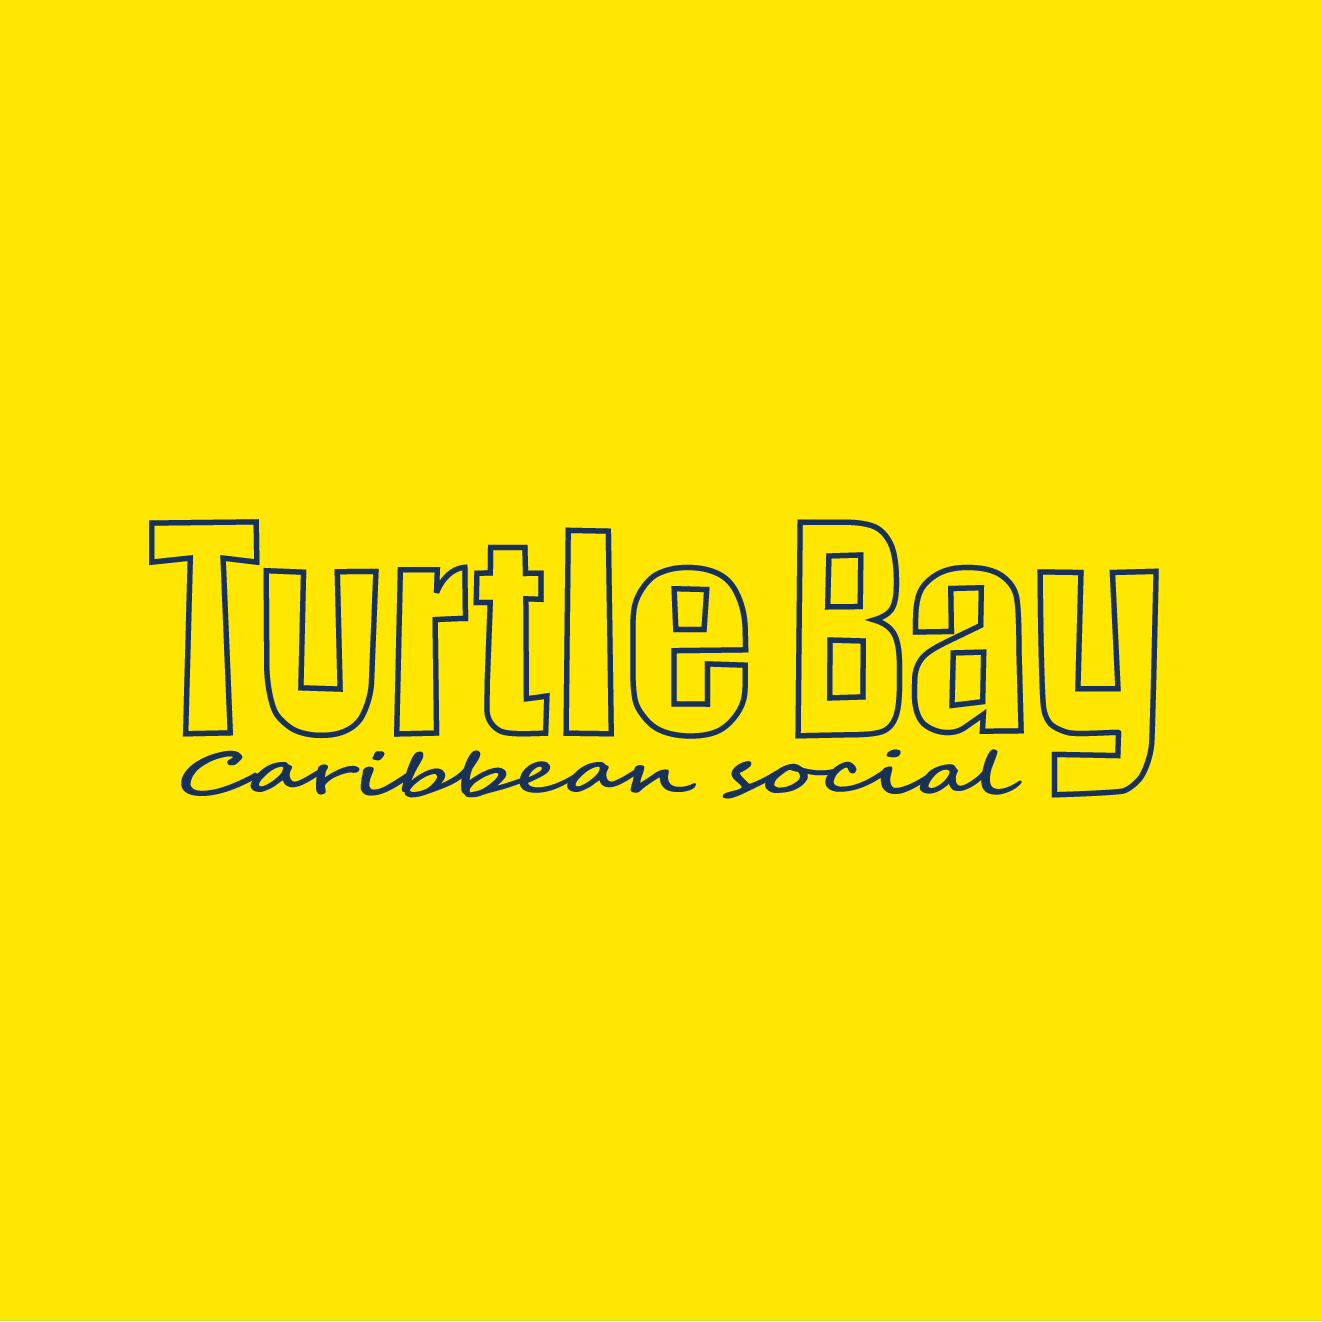 The Best Caribbean Restaurant & Bar in Britain - Turtle Bay UK